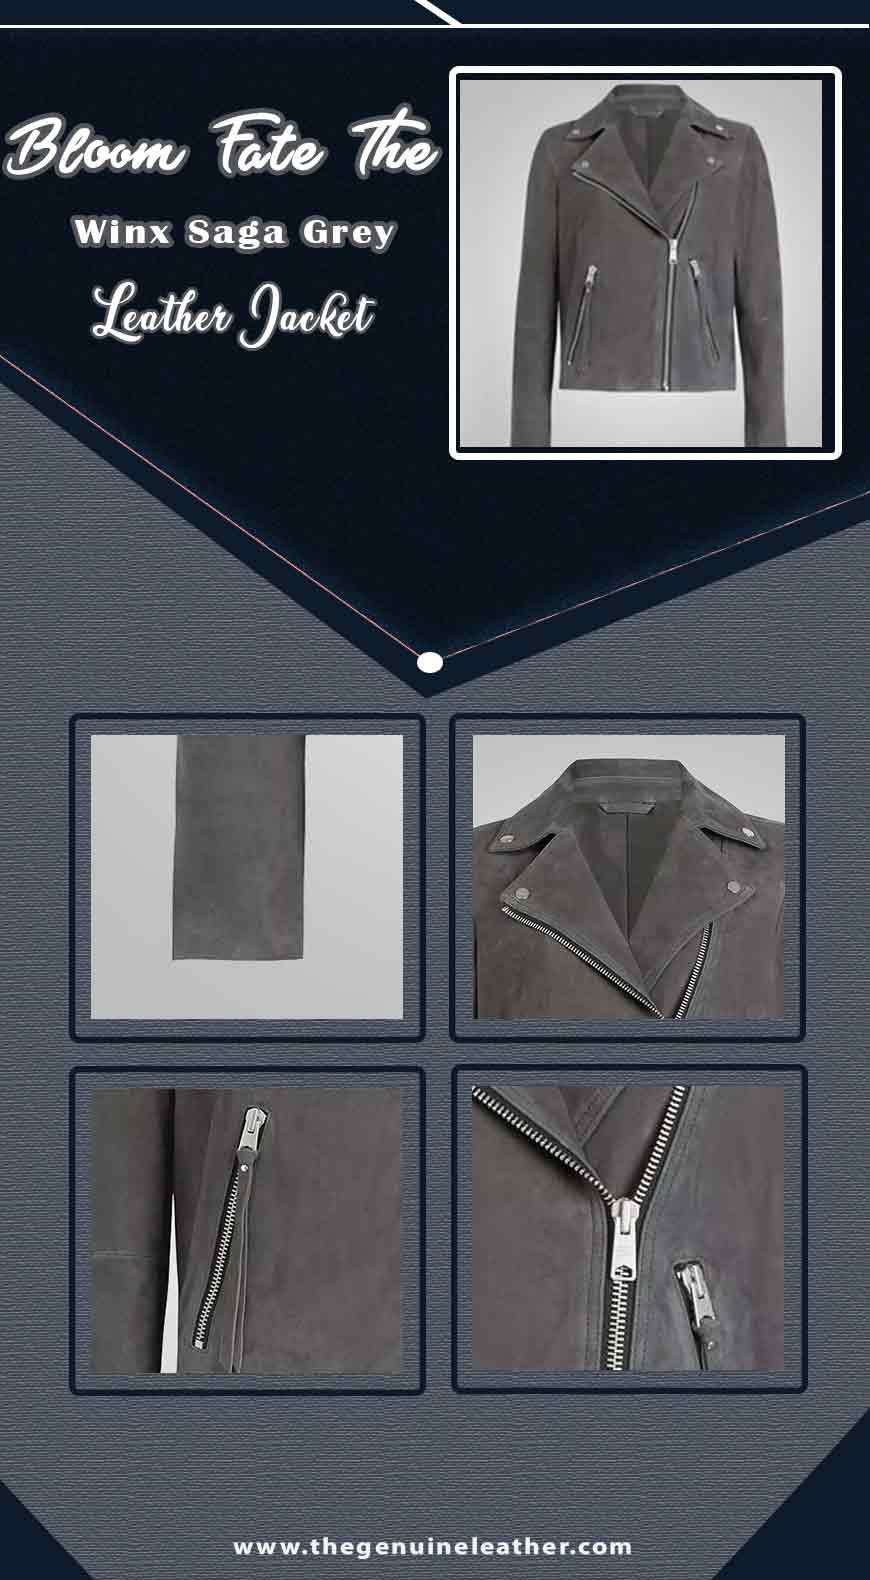 Bloom Fate The Winx Saga Grey Leather Jacket info